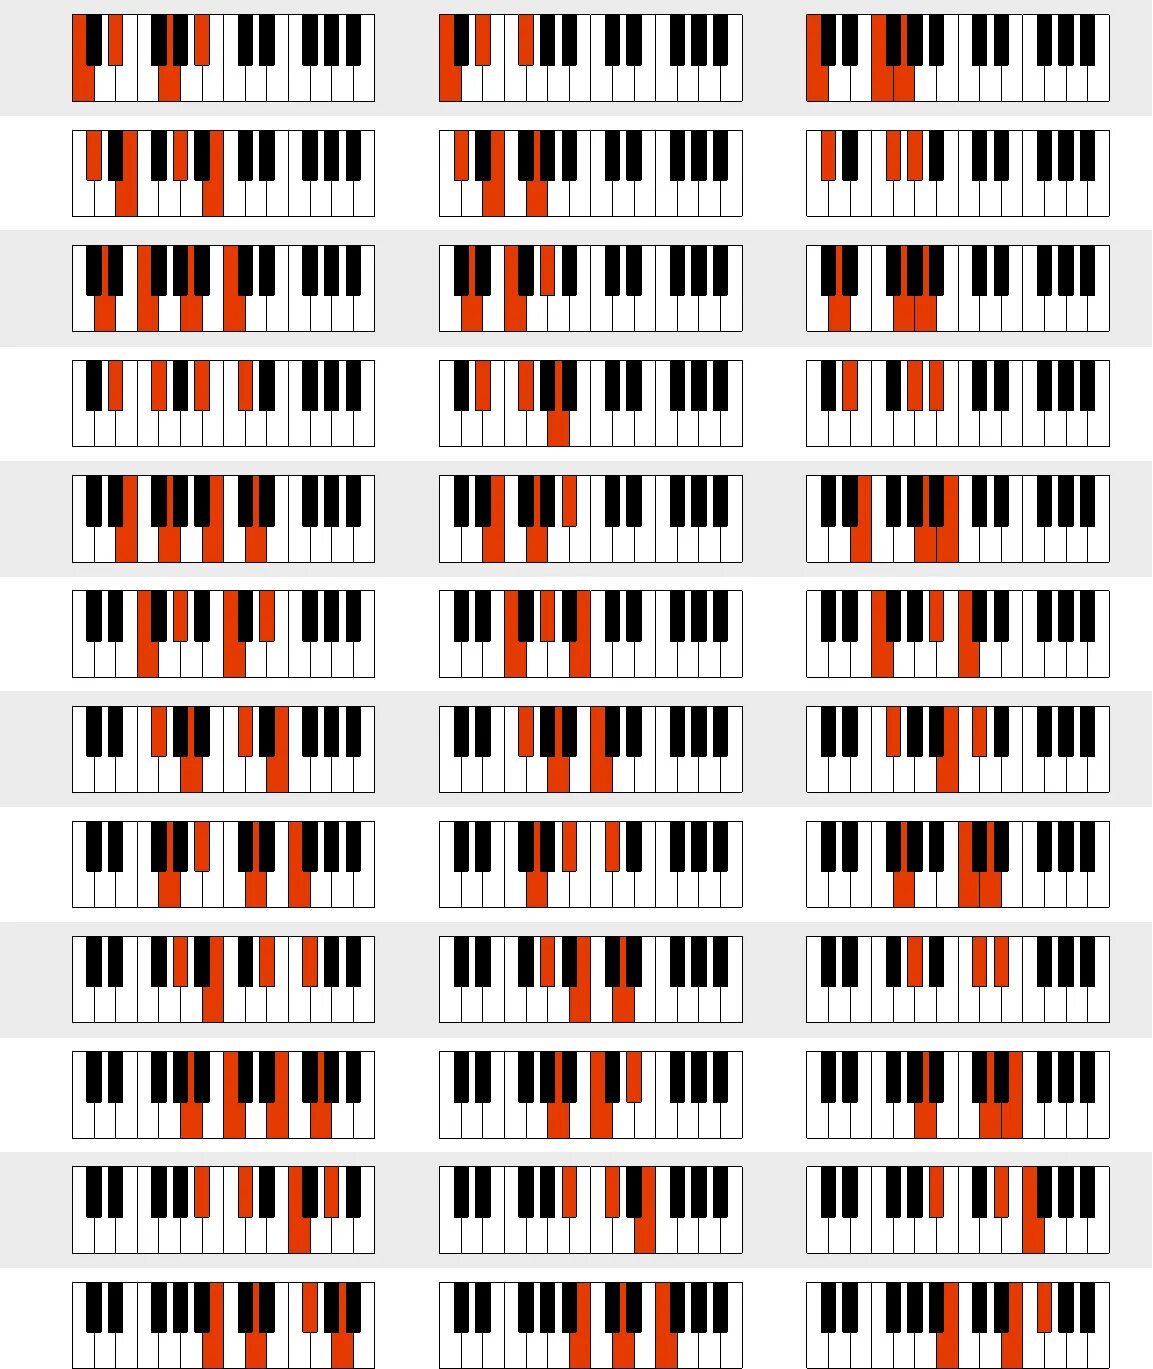 Таблица аккордов для синтезатора Yamaha. Аккорд h7 на пианино. Таблица аккордов на синтезаторе Ямаха. Аккорд h7 на синтезаторе. Аккордов майне